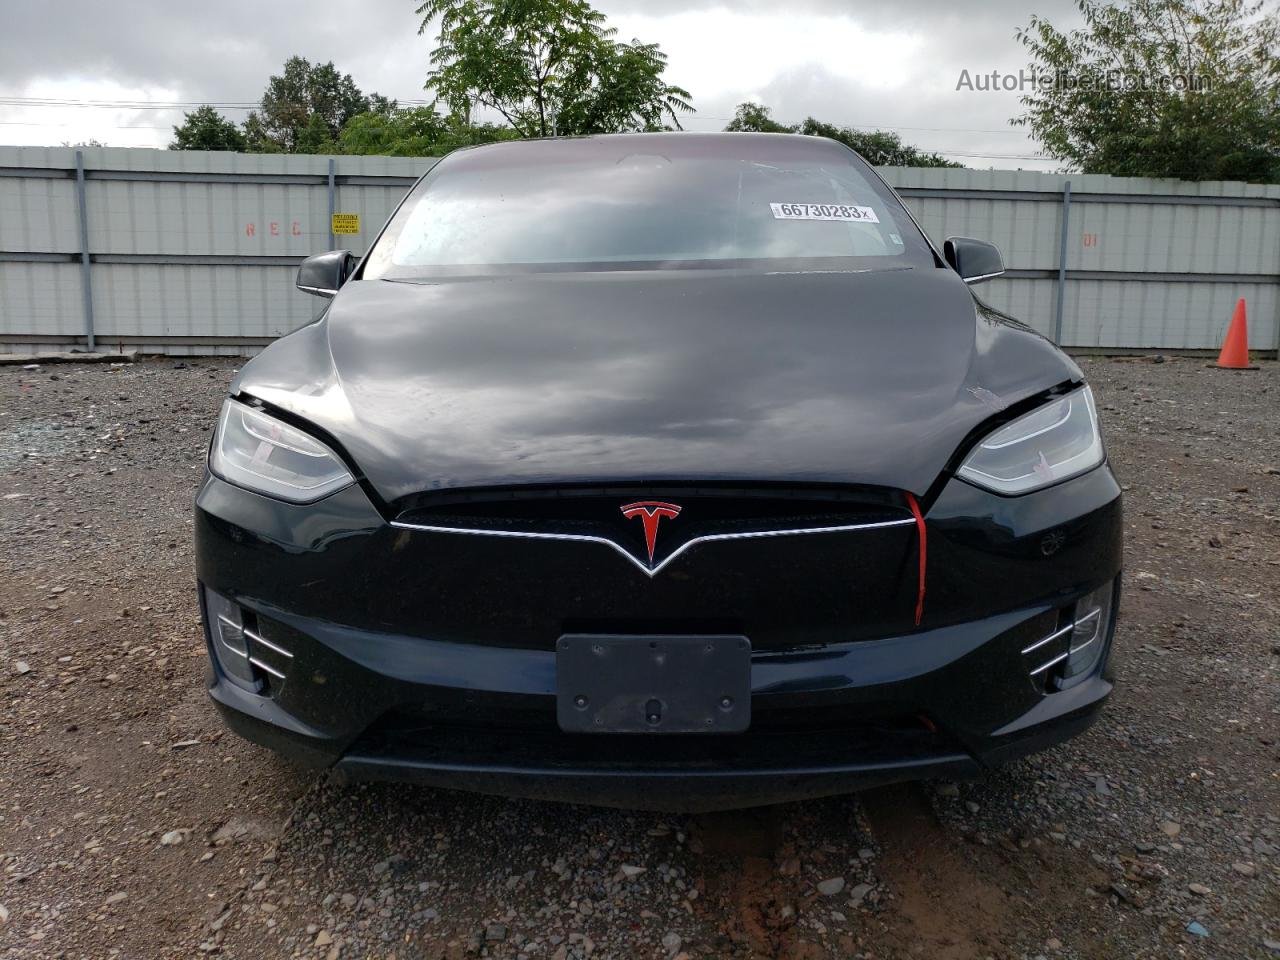 2018 Tesla Model X  Black vin: 5YJXCDE24JF135959